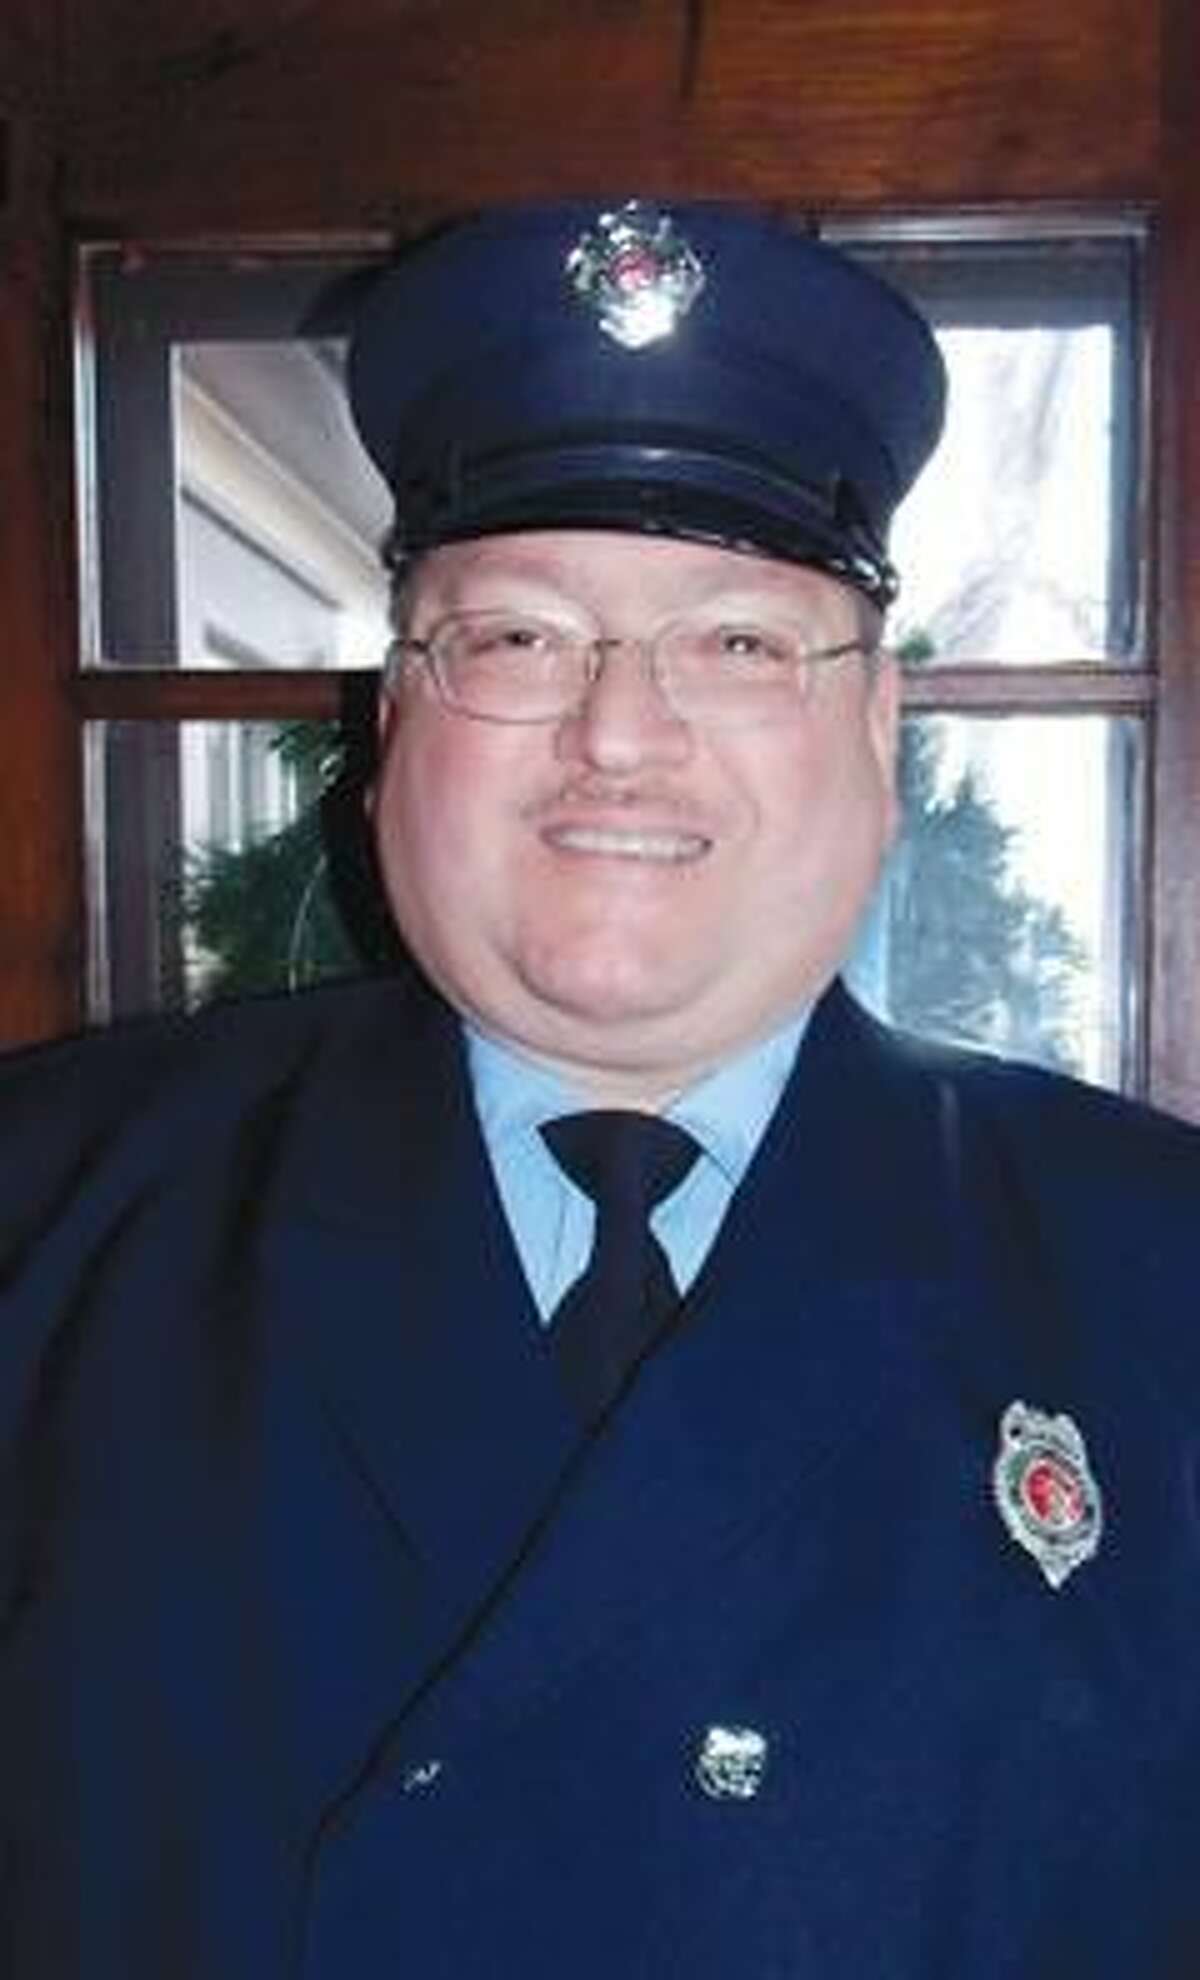 Outstanding Volunteer Firefighter Ronald Mattei